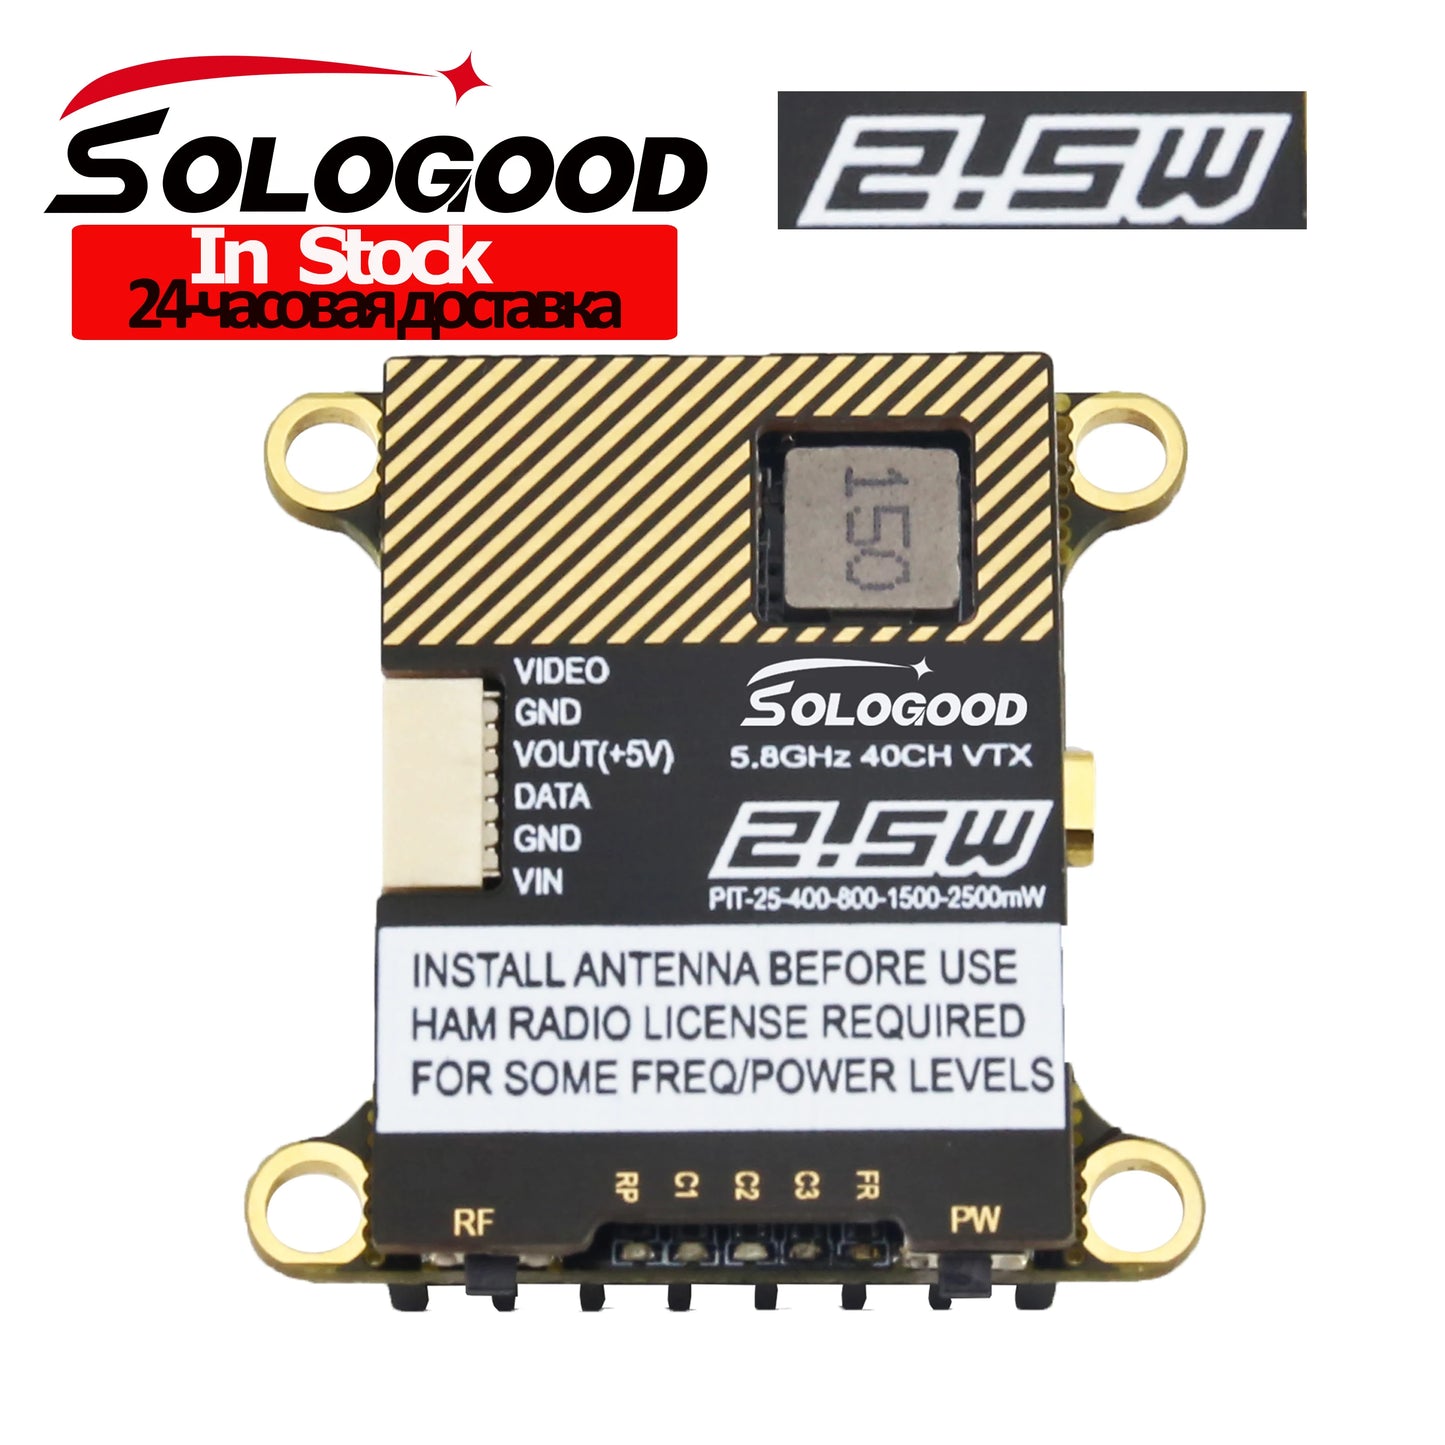 SoloGood 5.8G 2.5W 40CH VTX, SOLOGOOD BSU In Stock 244toBaapodaba 8 VIDE